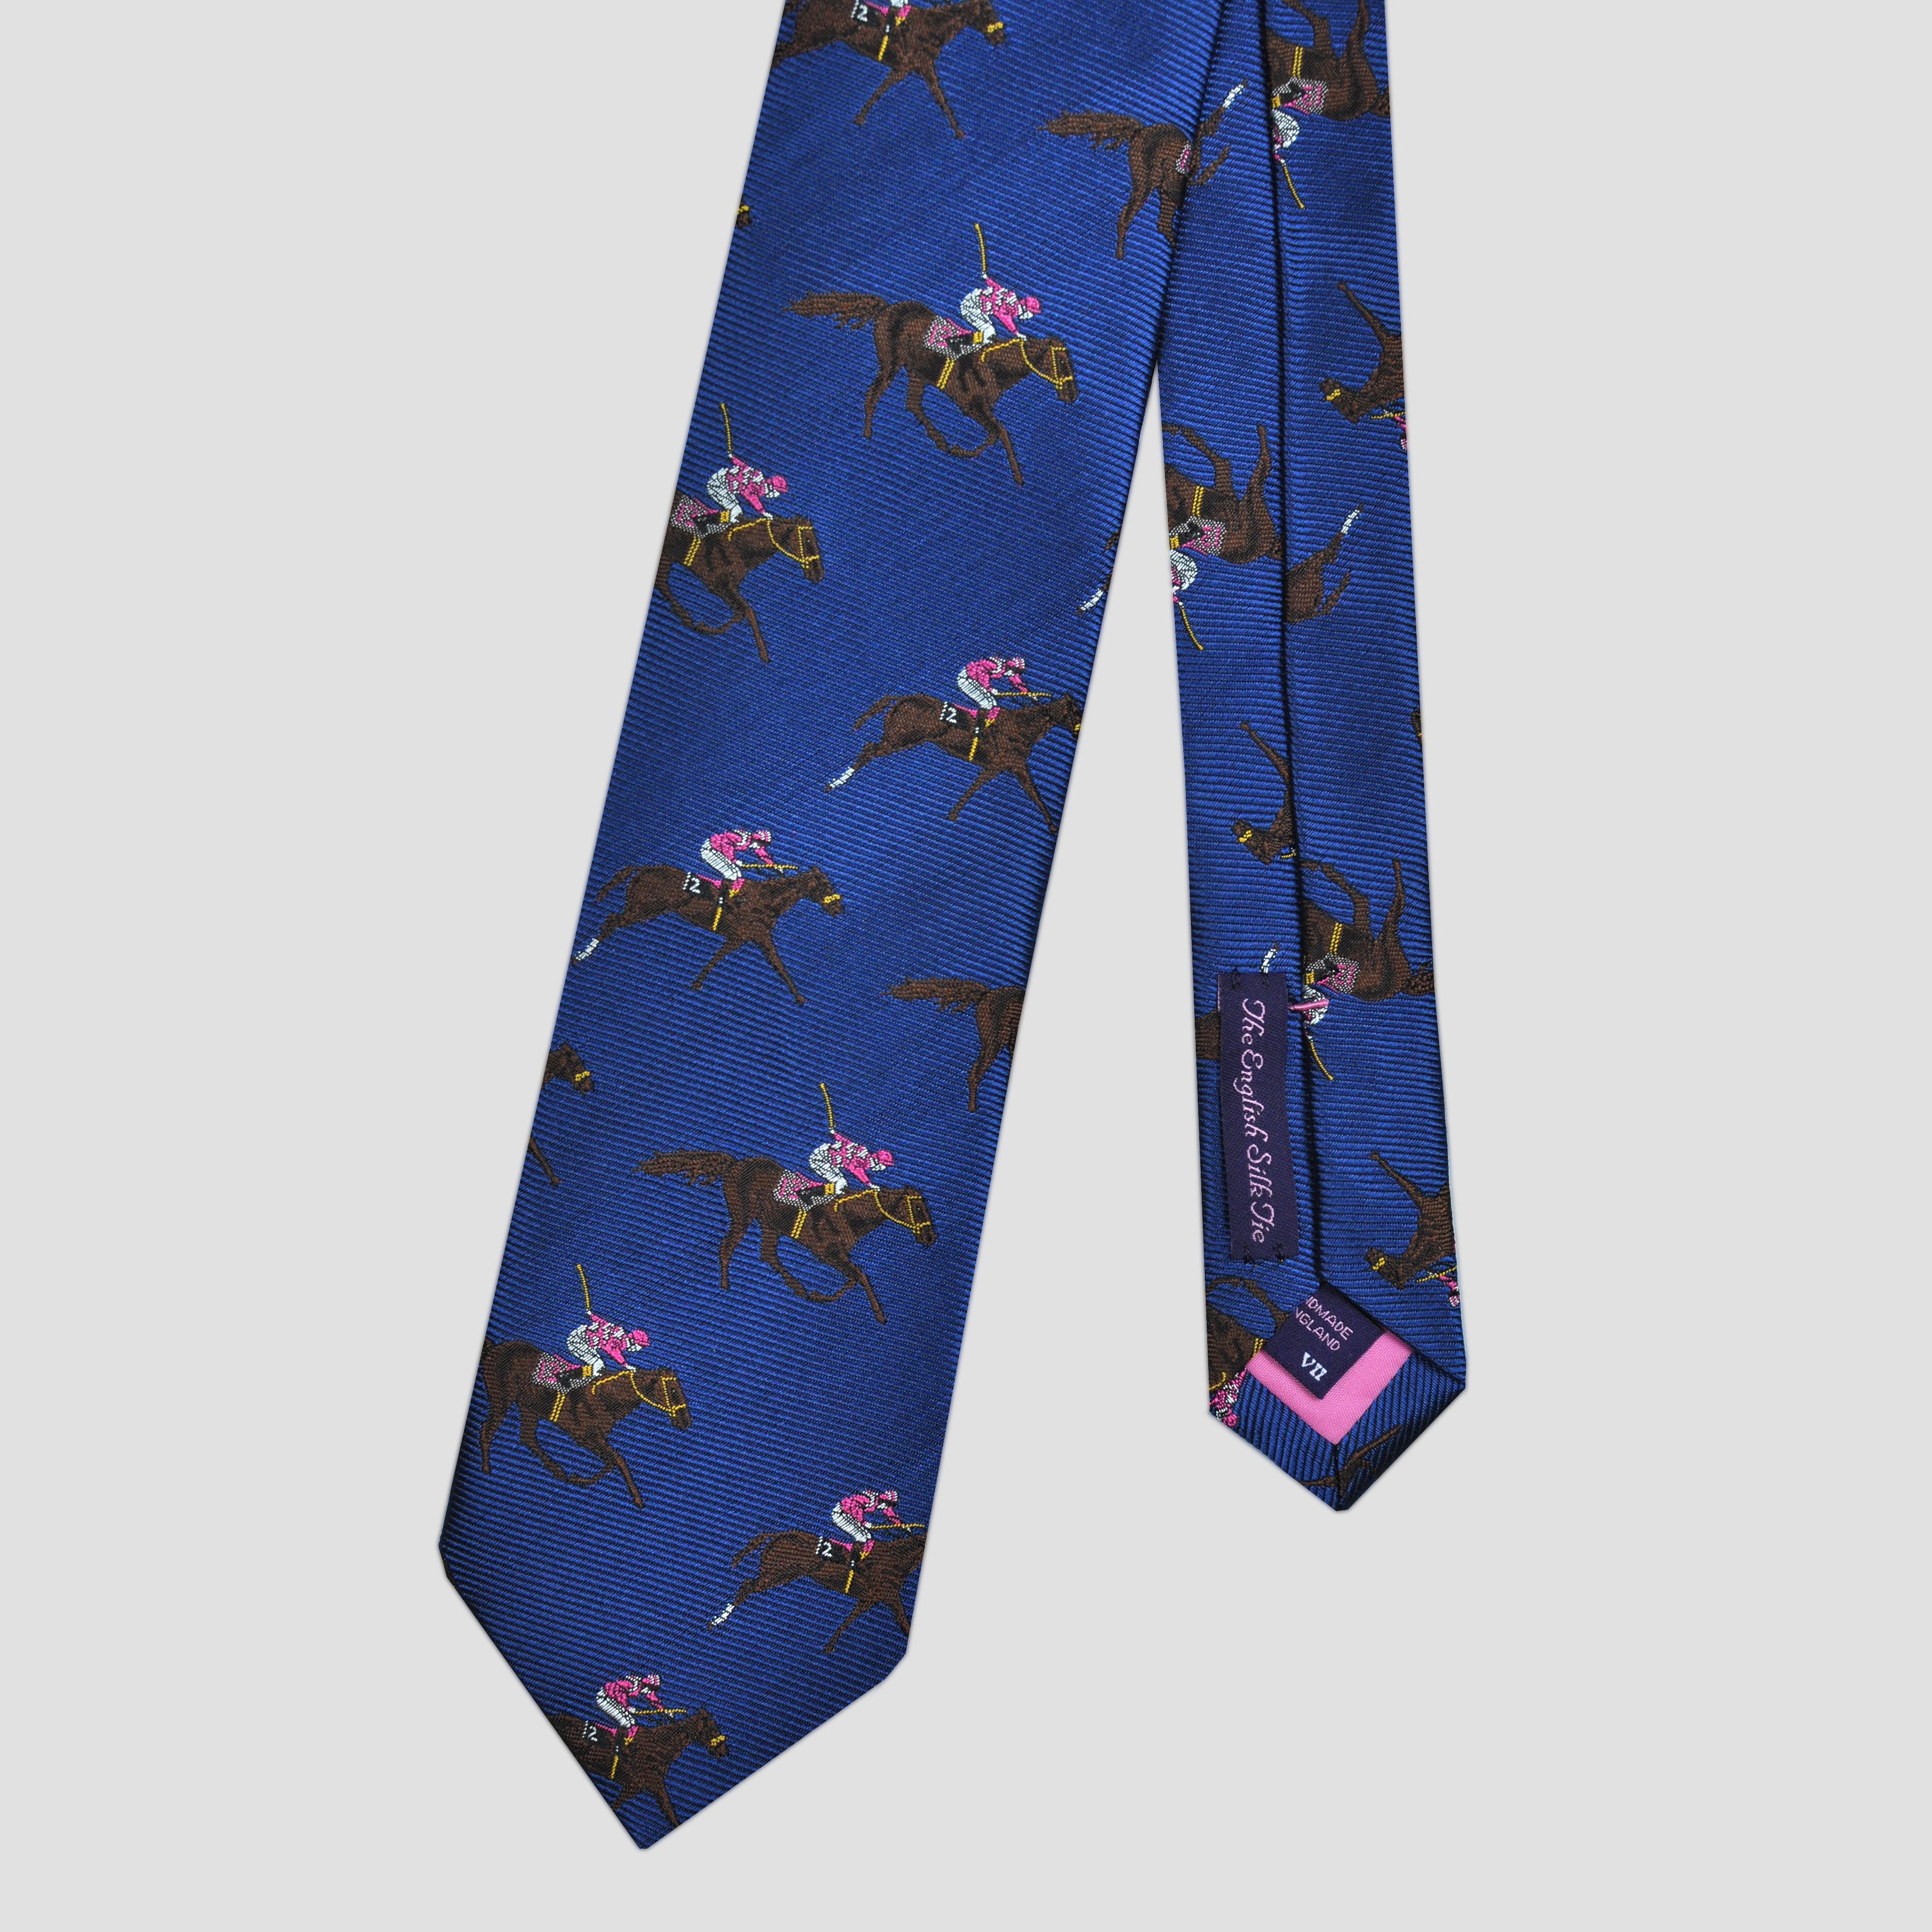 English Woven Silk 'Jockeys' Tie in Royal Blue